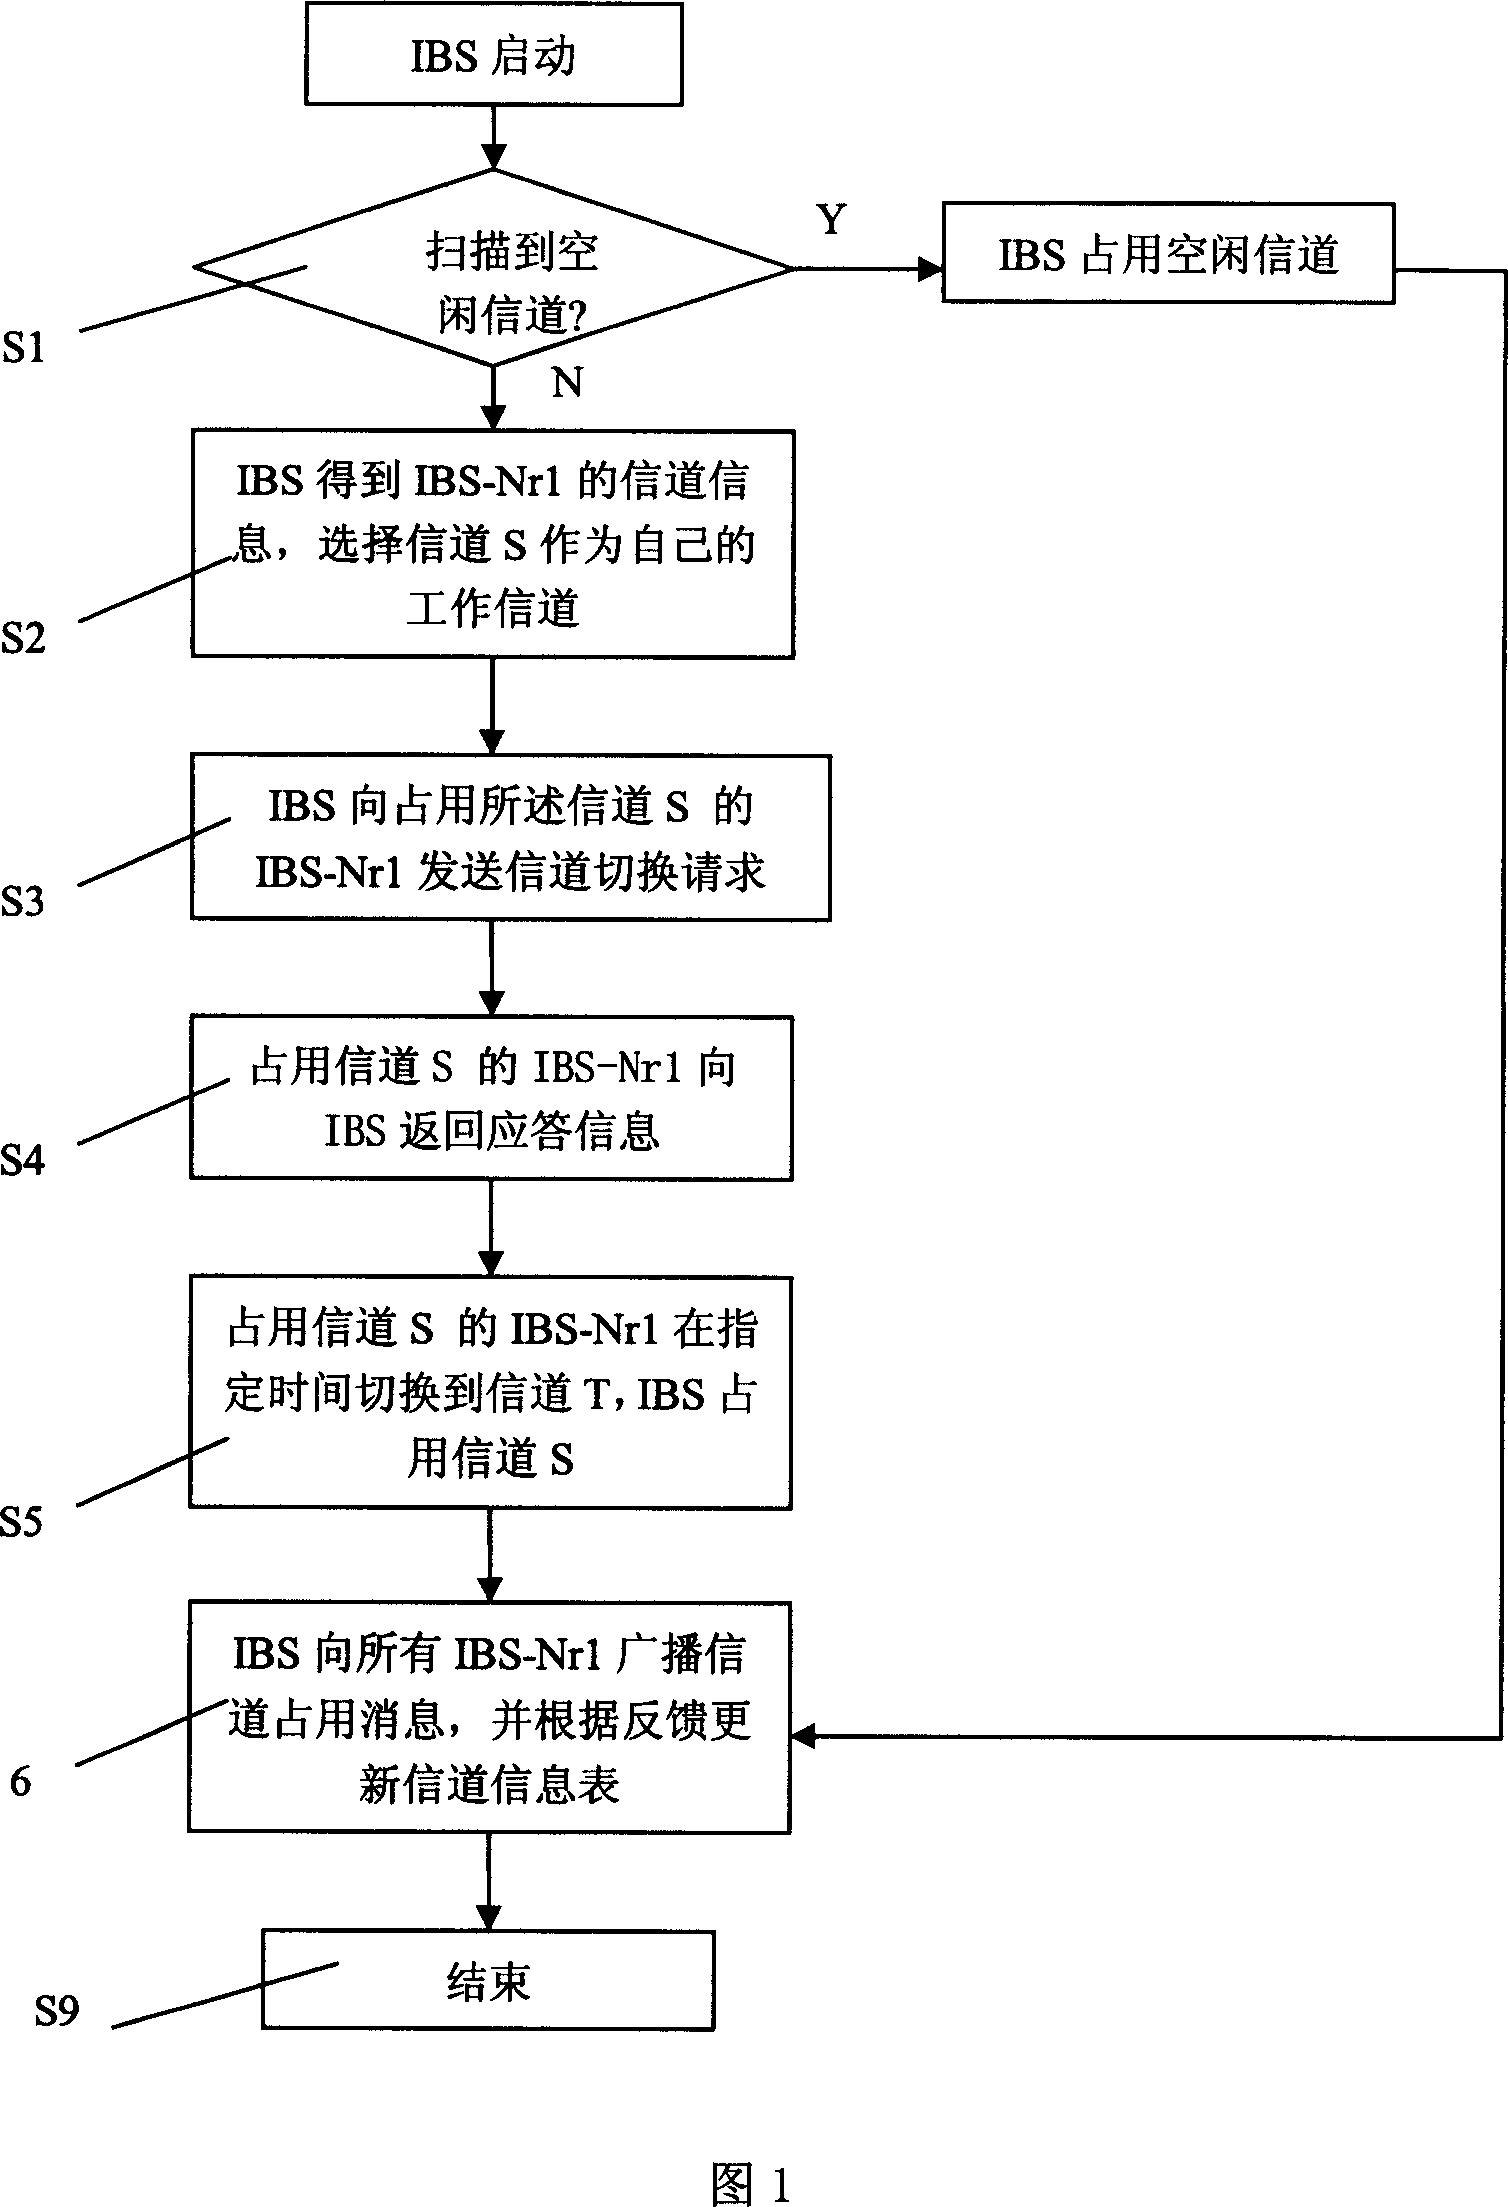 Method for sonsultating working channel between adjacent base stations